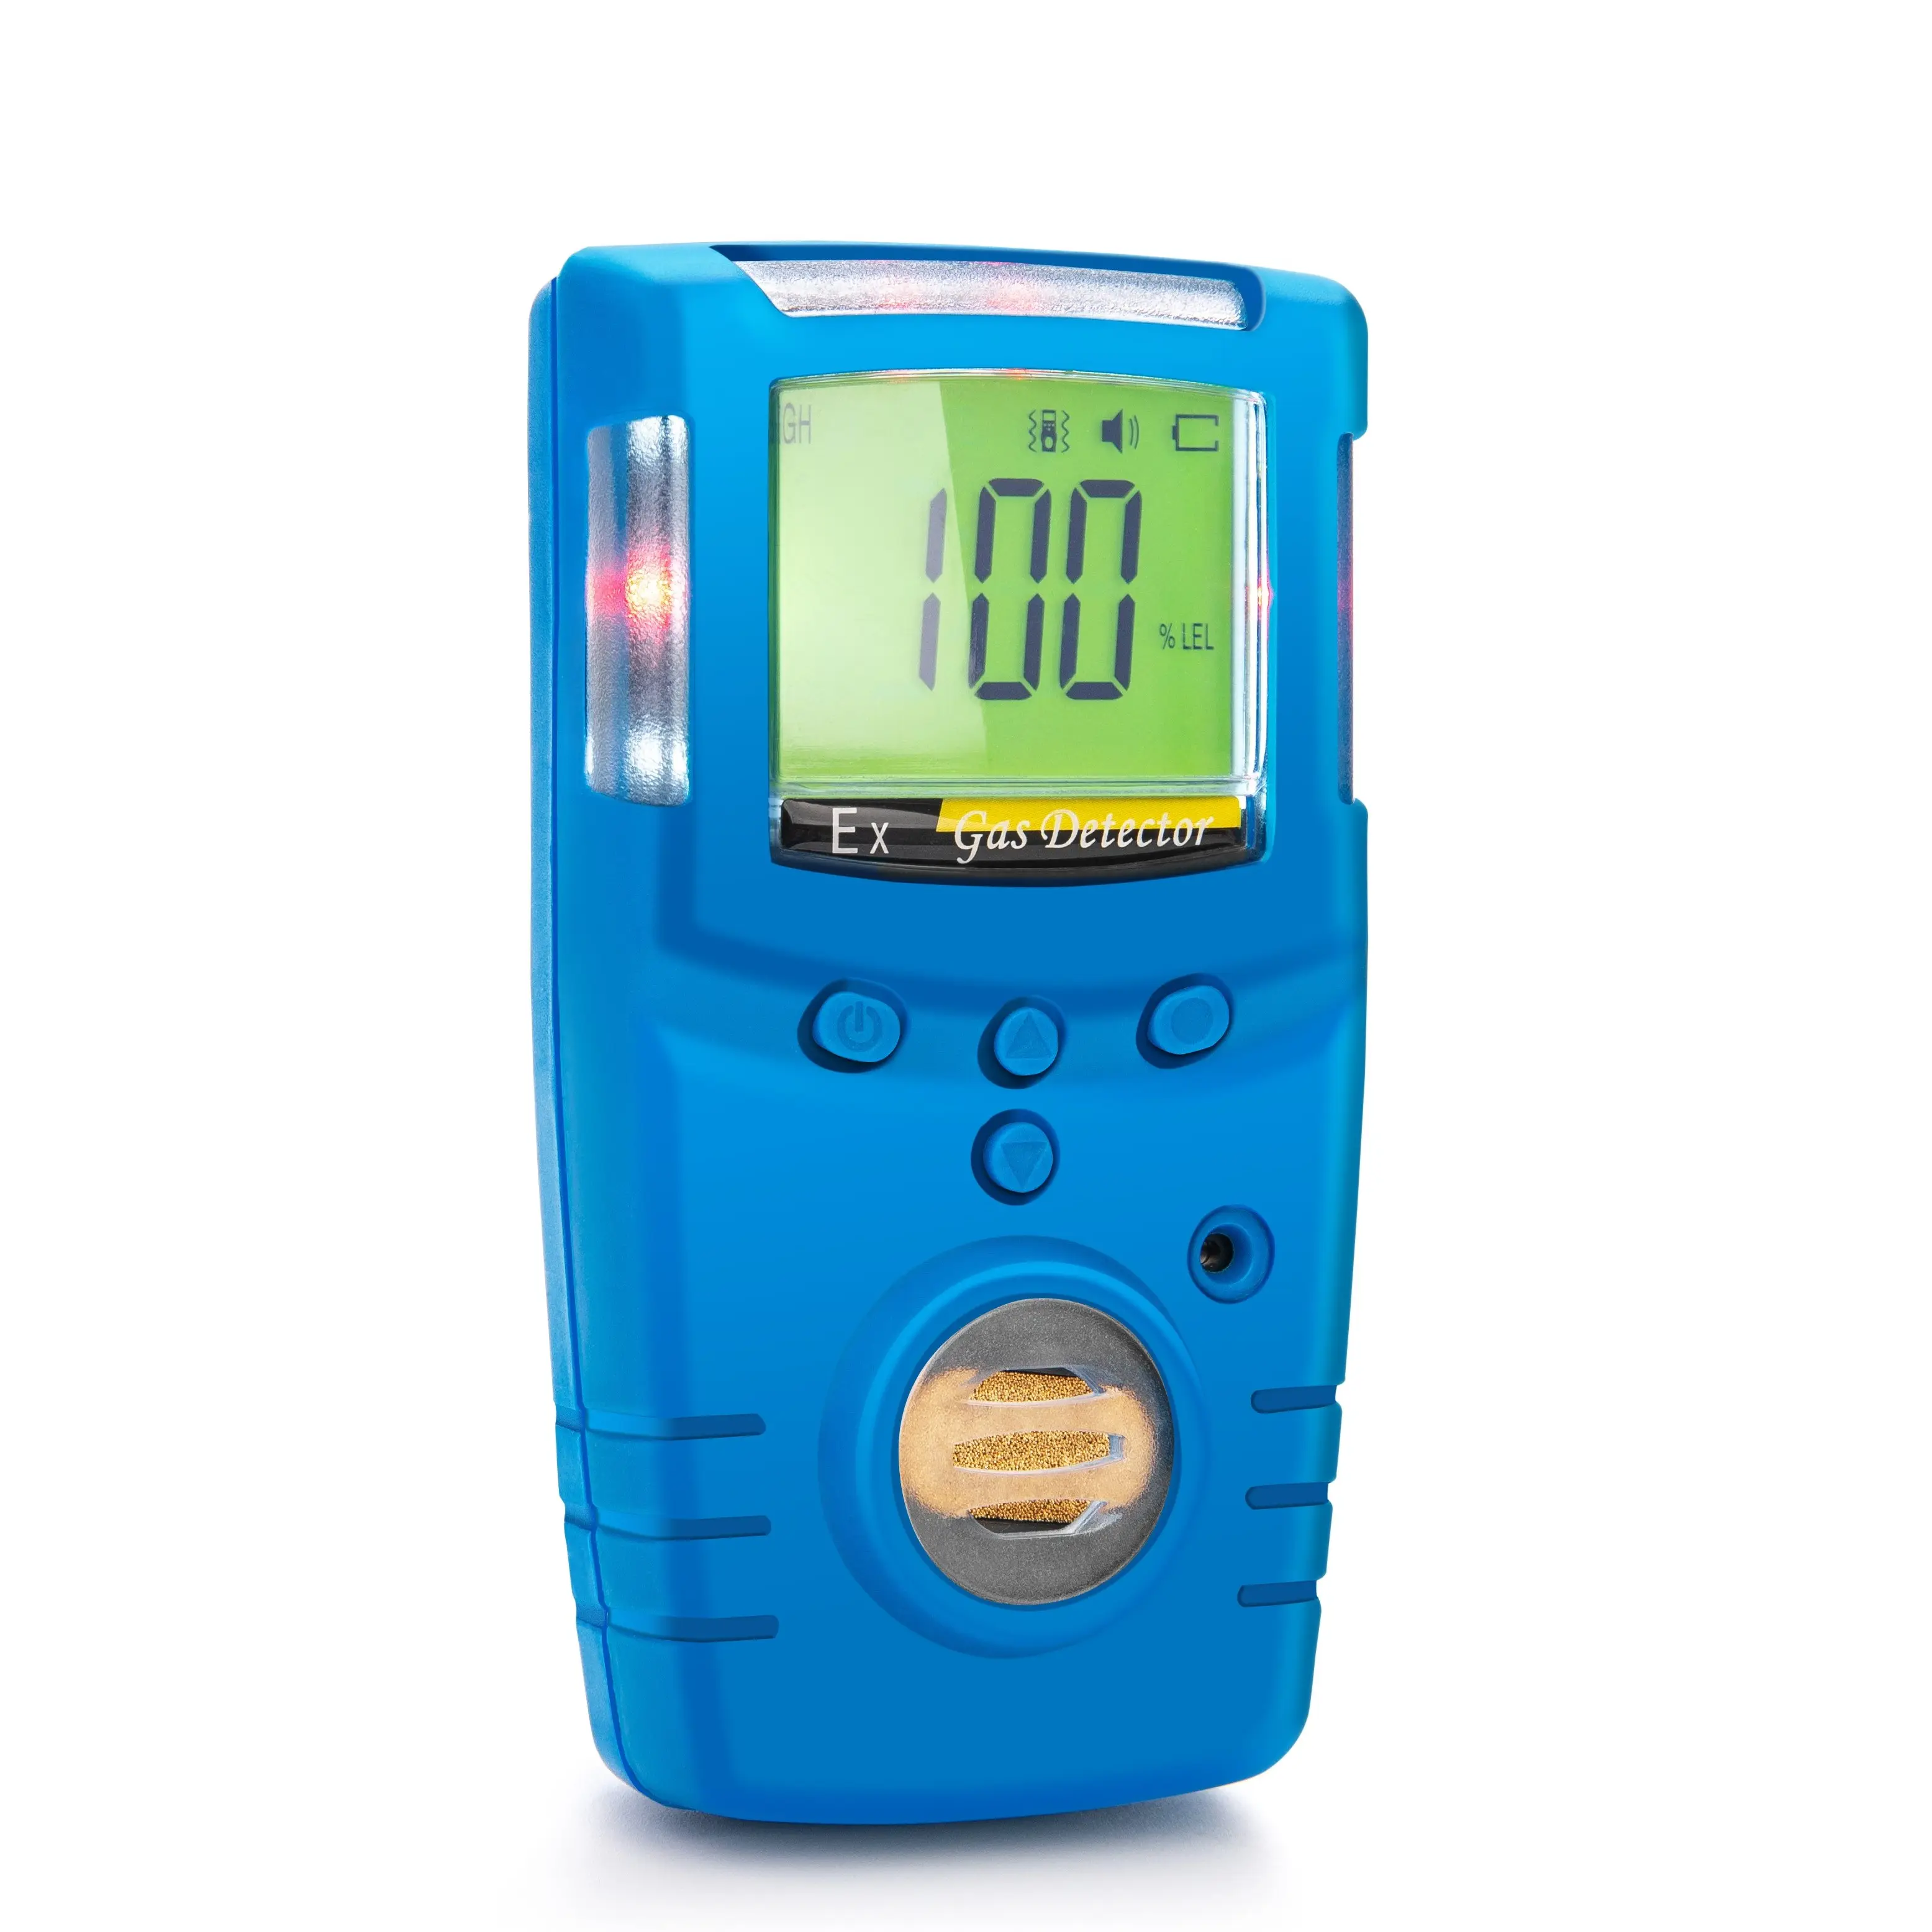 Detektor gas berbahaya portabel, doff co fosfin metana Harga monitor meter